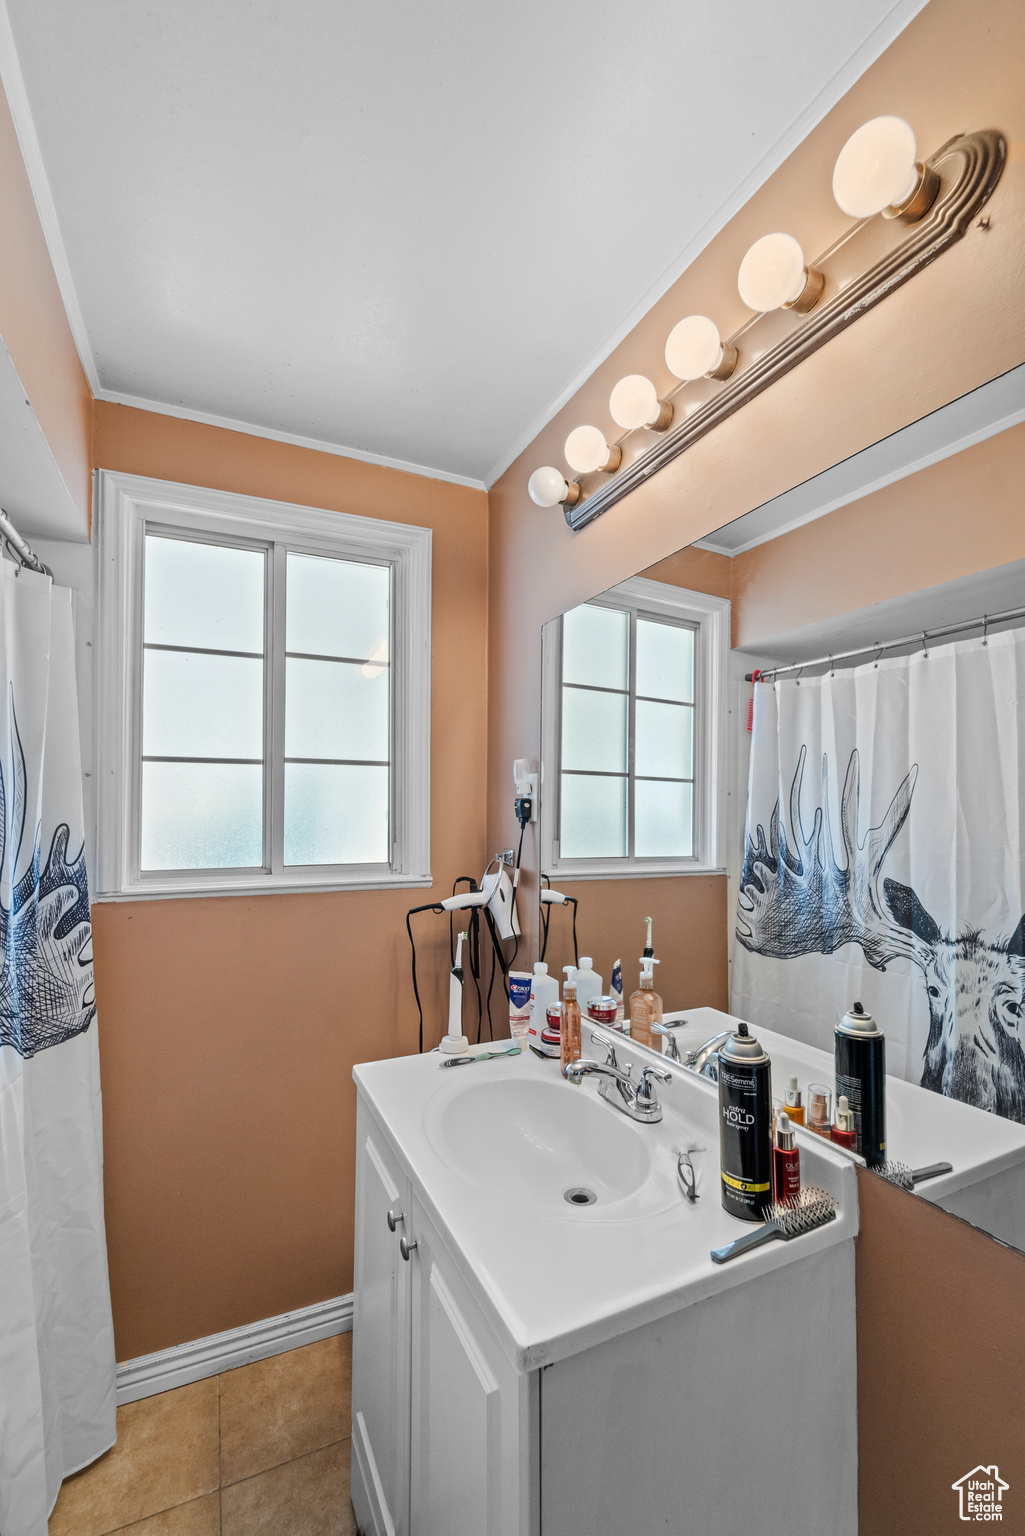 Bathroom featuring tile flooring, ornamental molding, and vanity